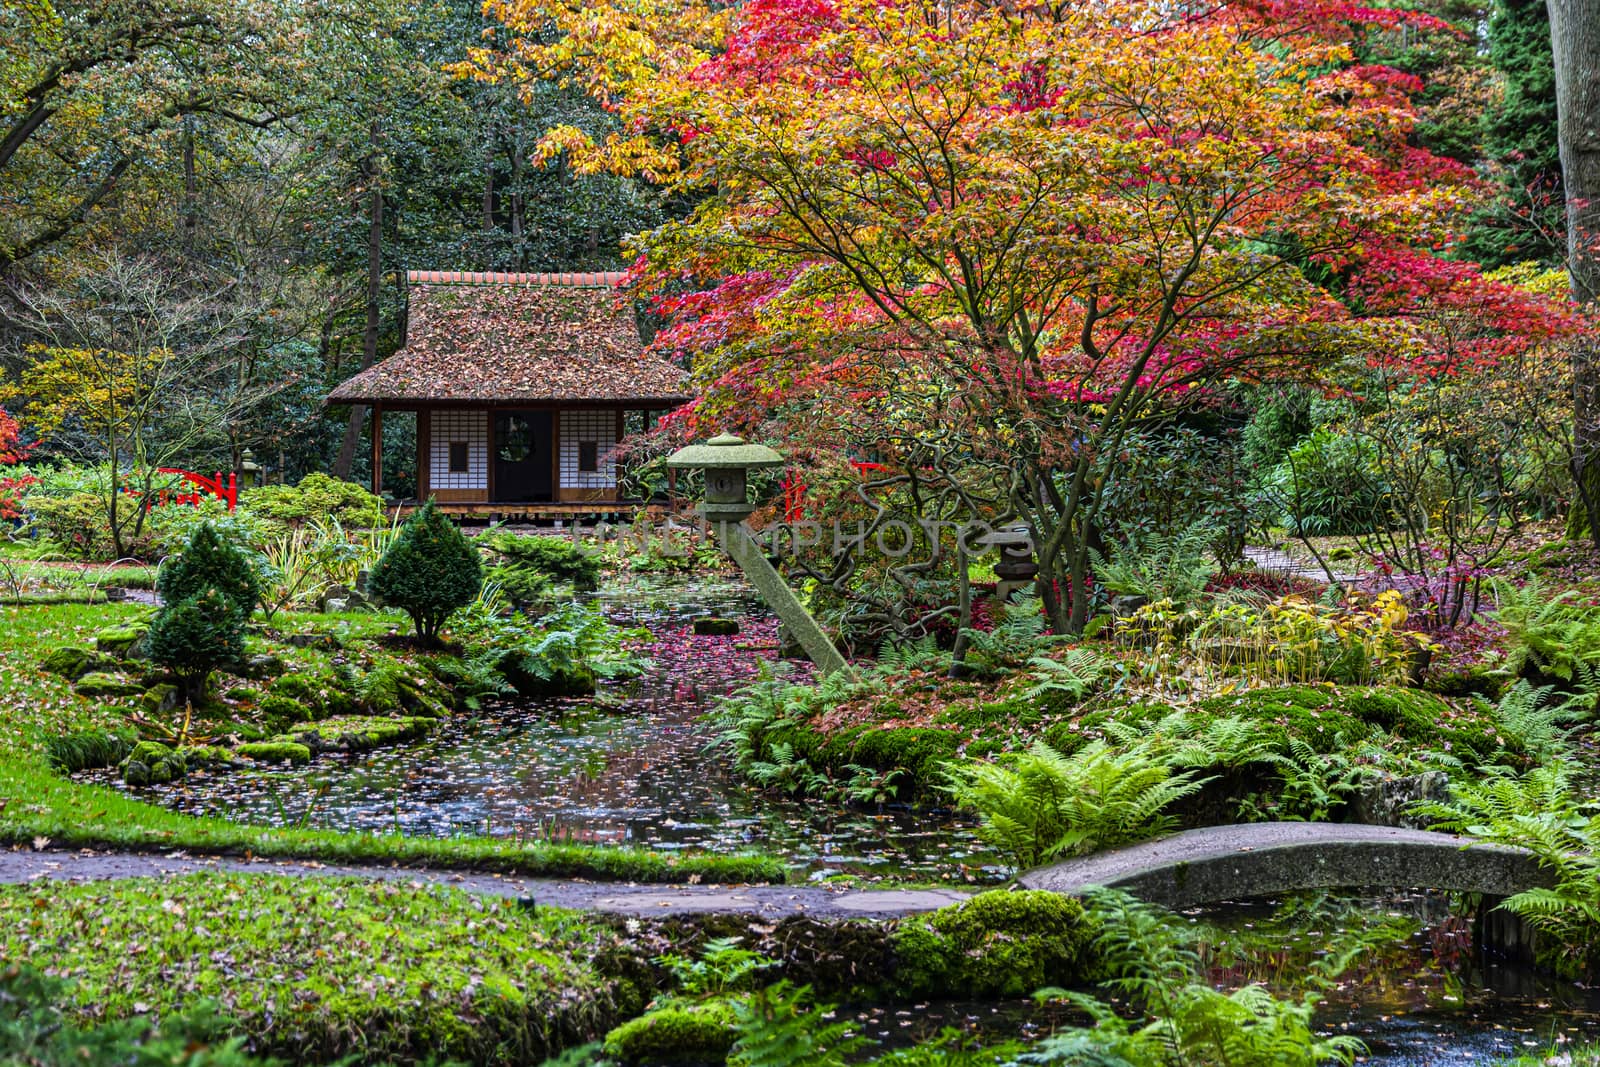 Beautiful Japanese garden blasting colors in the autumn season by ankorlight